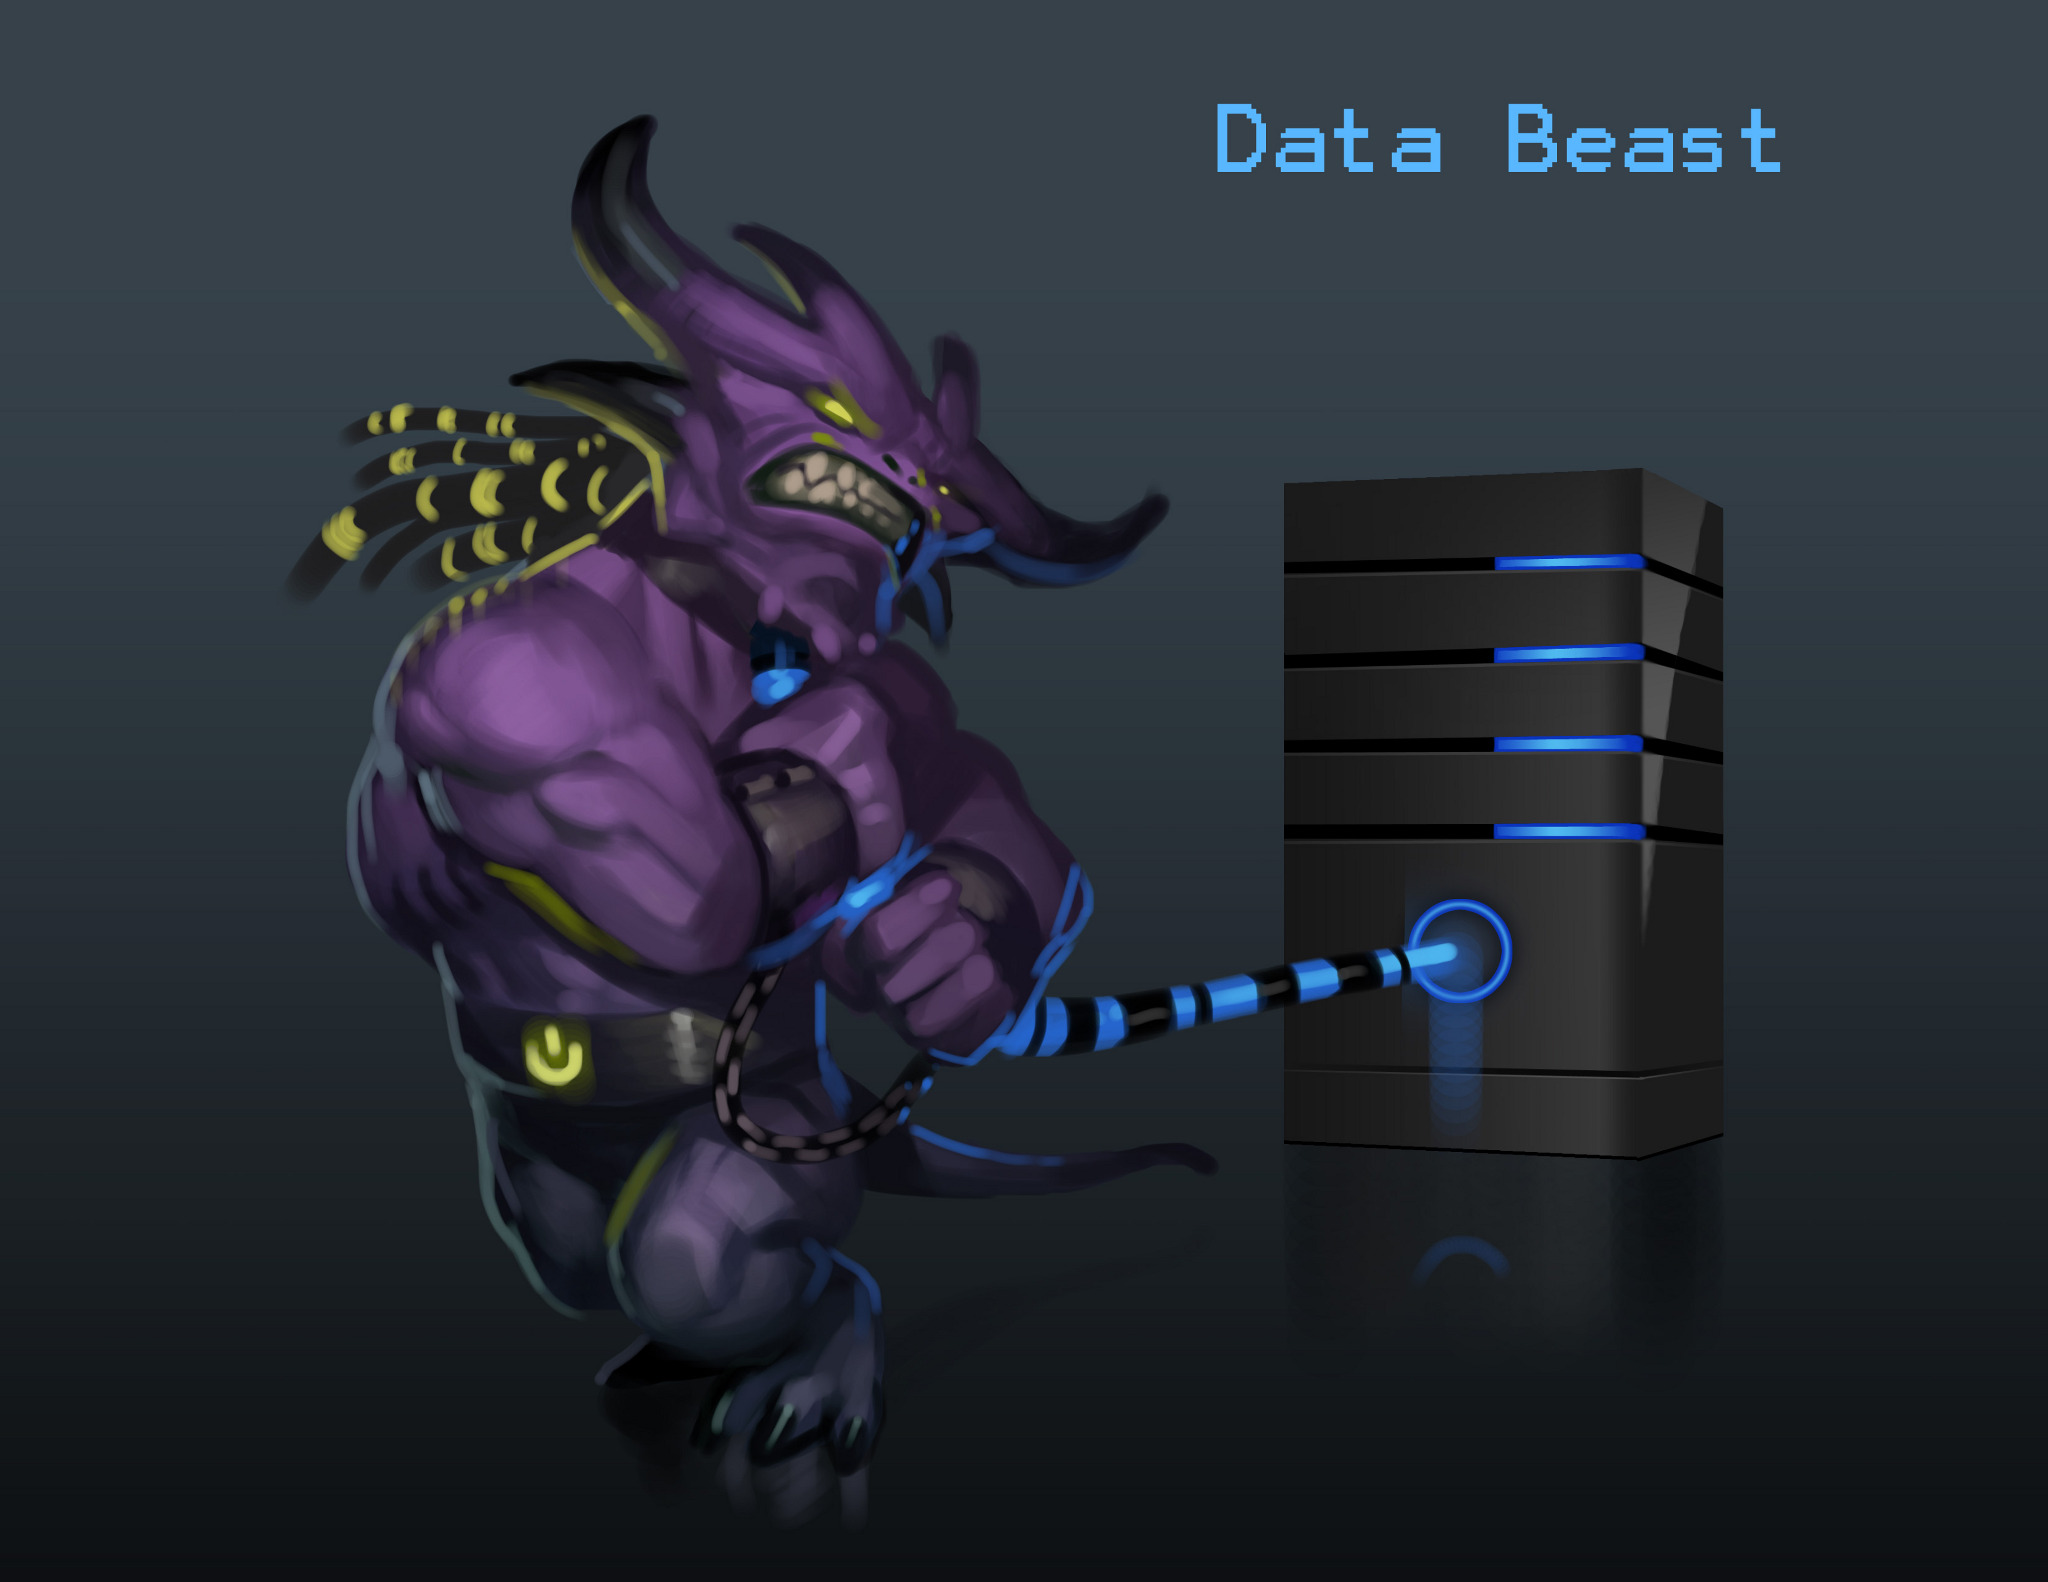 Harris-Broadcast-Invenio-Data-Beast-4.jpg